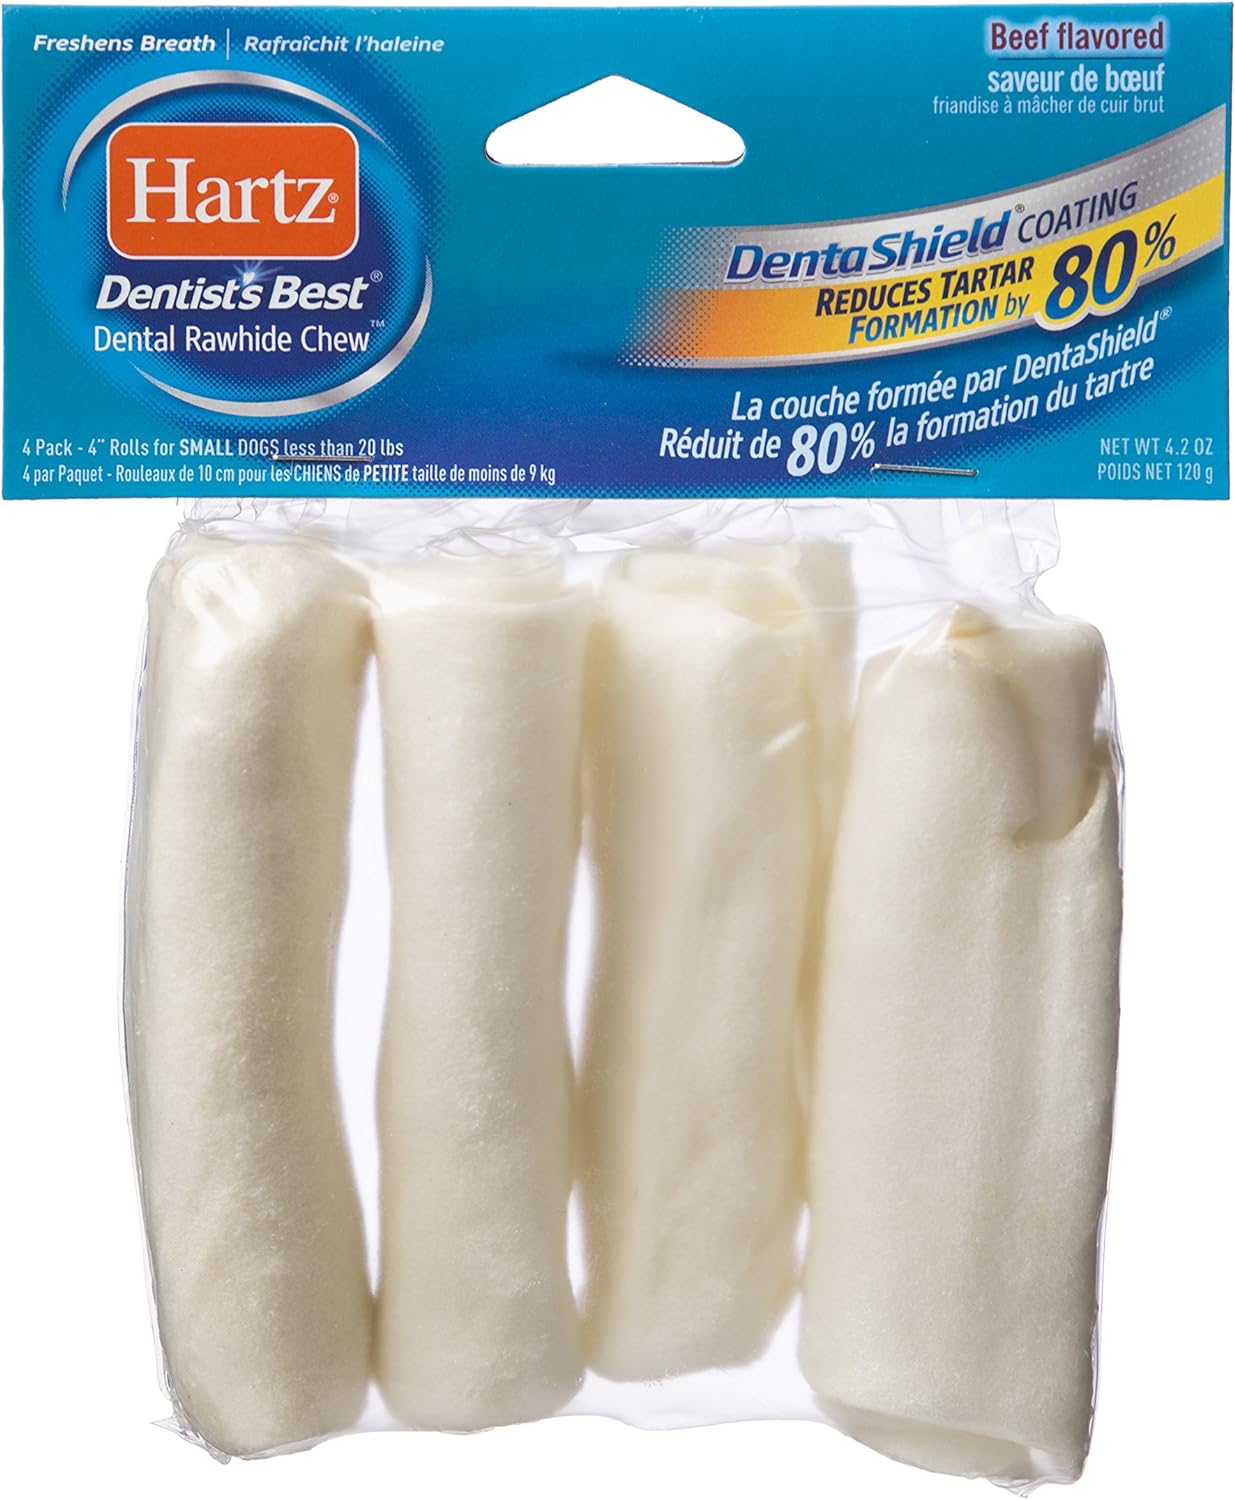 Hartz Dentist's Best 4" Rolled Rawhide Chew, Beef Flavor, 4 pack